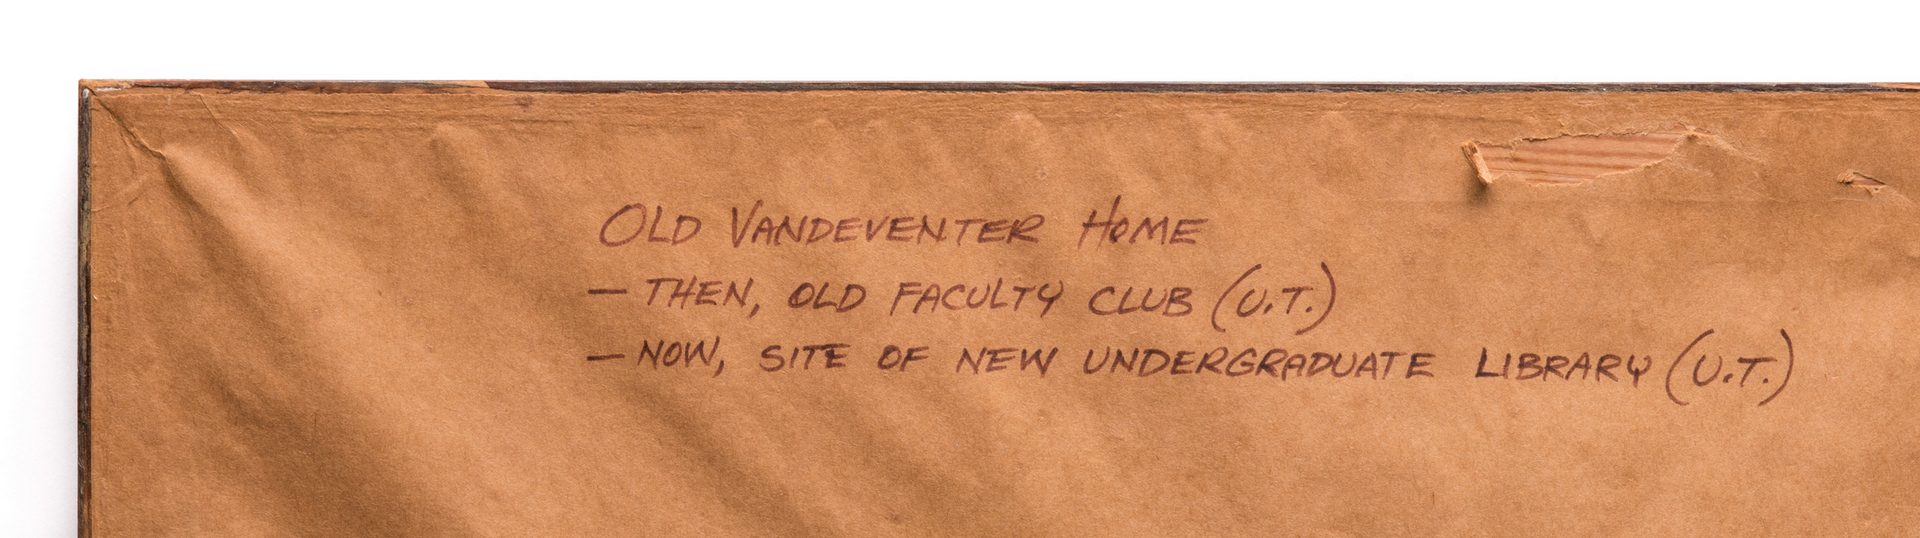 Lot 124: Carl Sublett Watercolor, "Van Deventer Home"